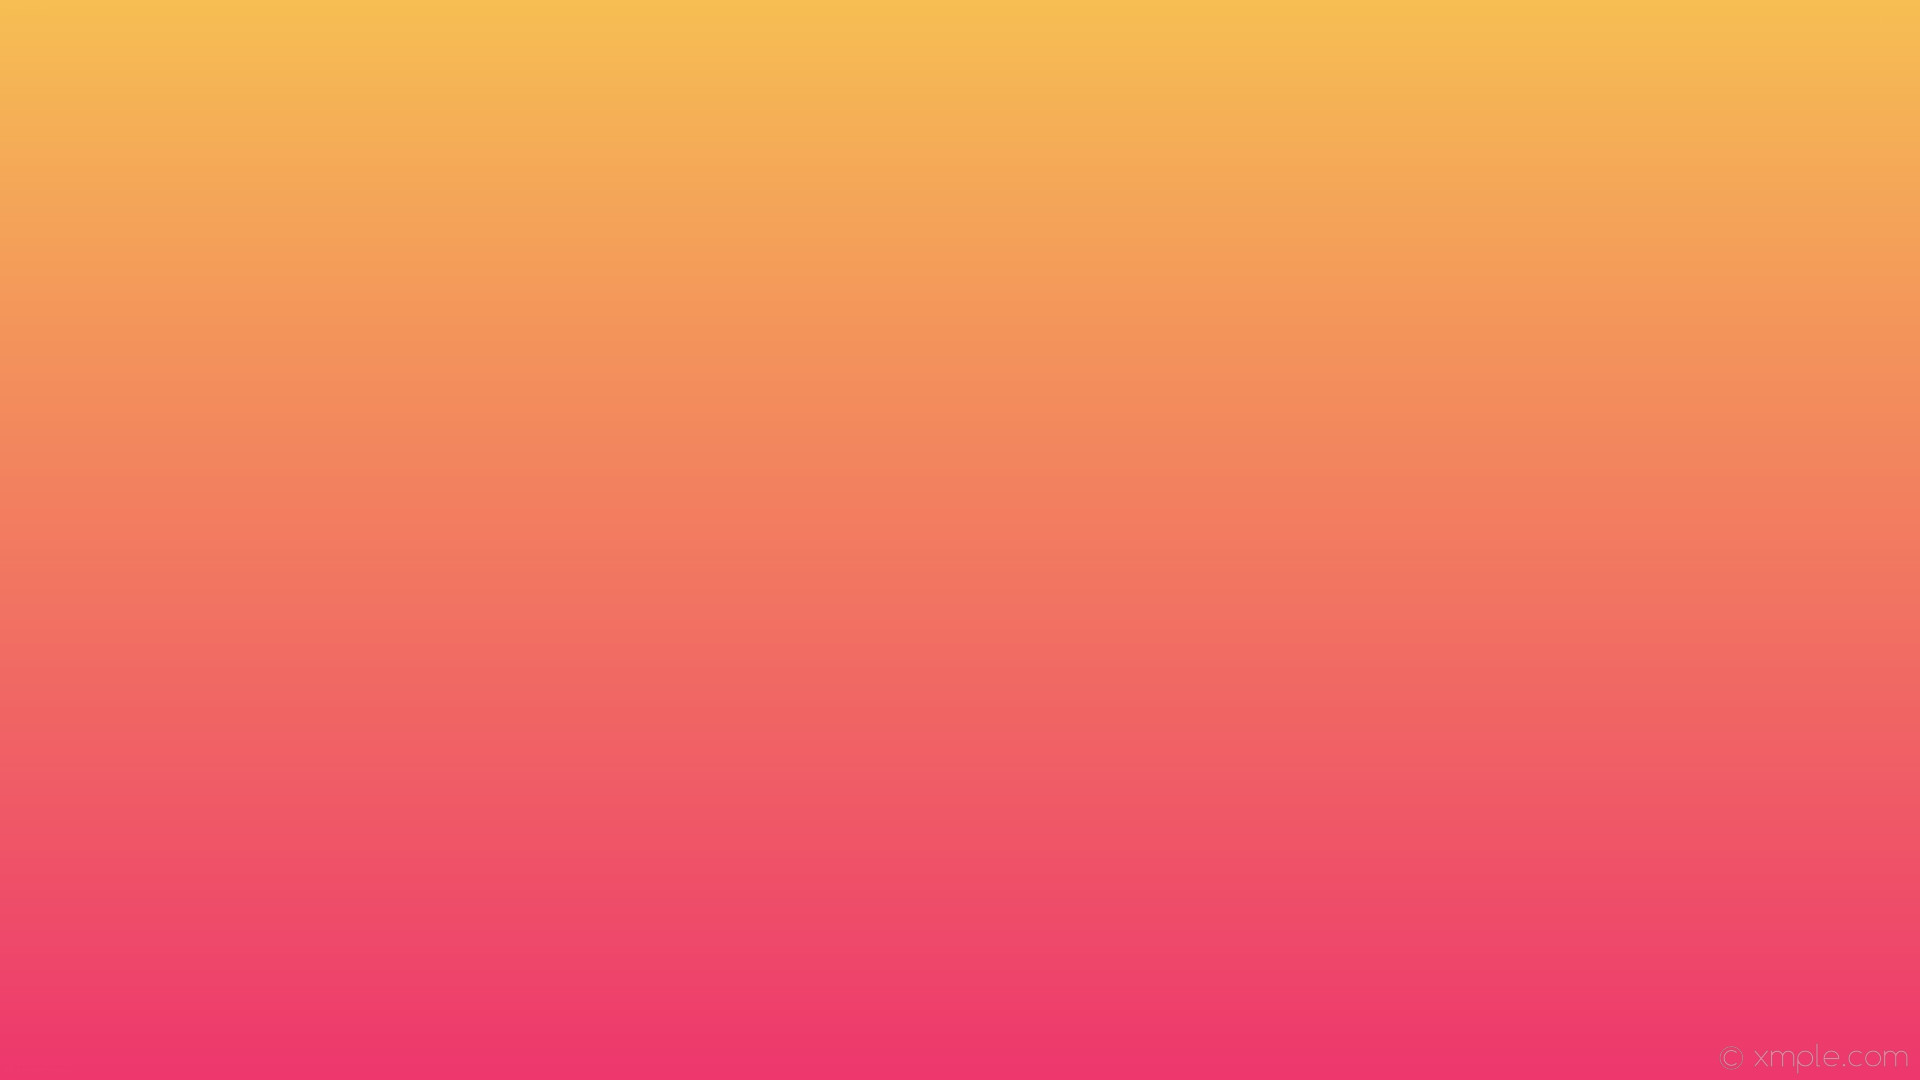 8. Summer Nails: Orange and Pink Gradient Design - wide 3